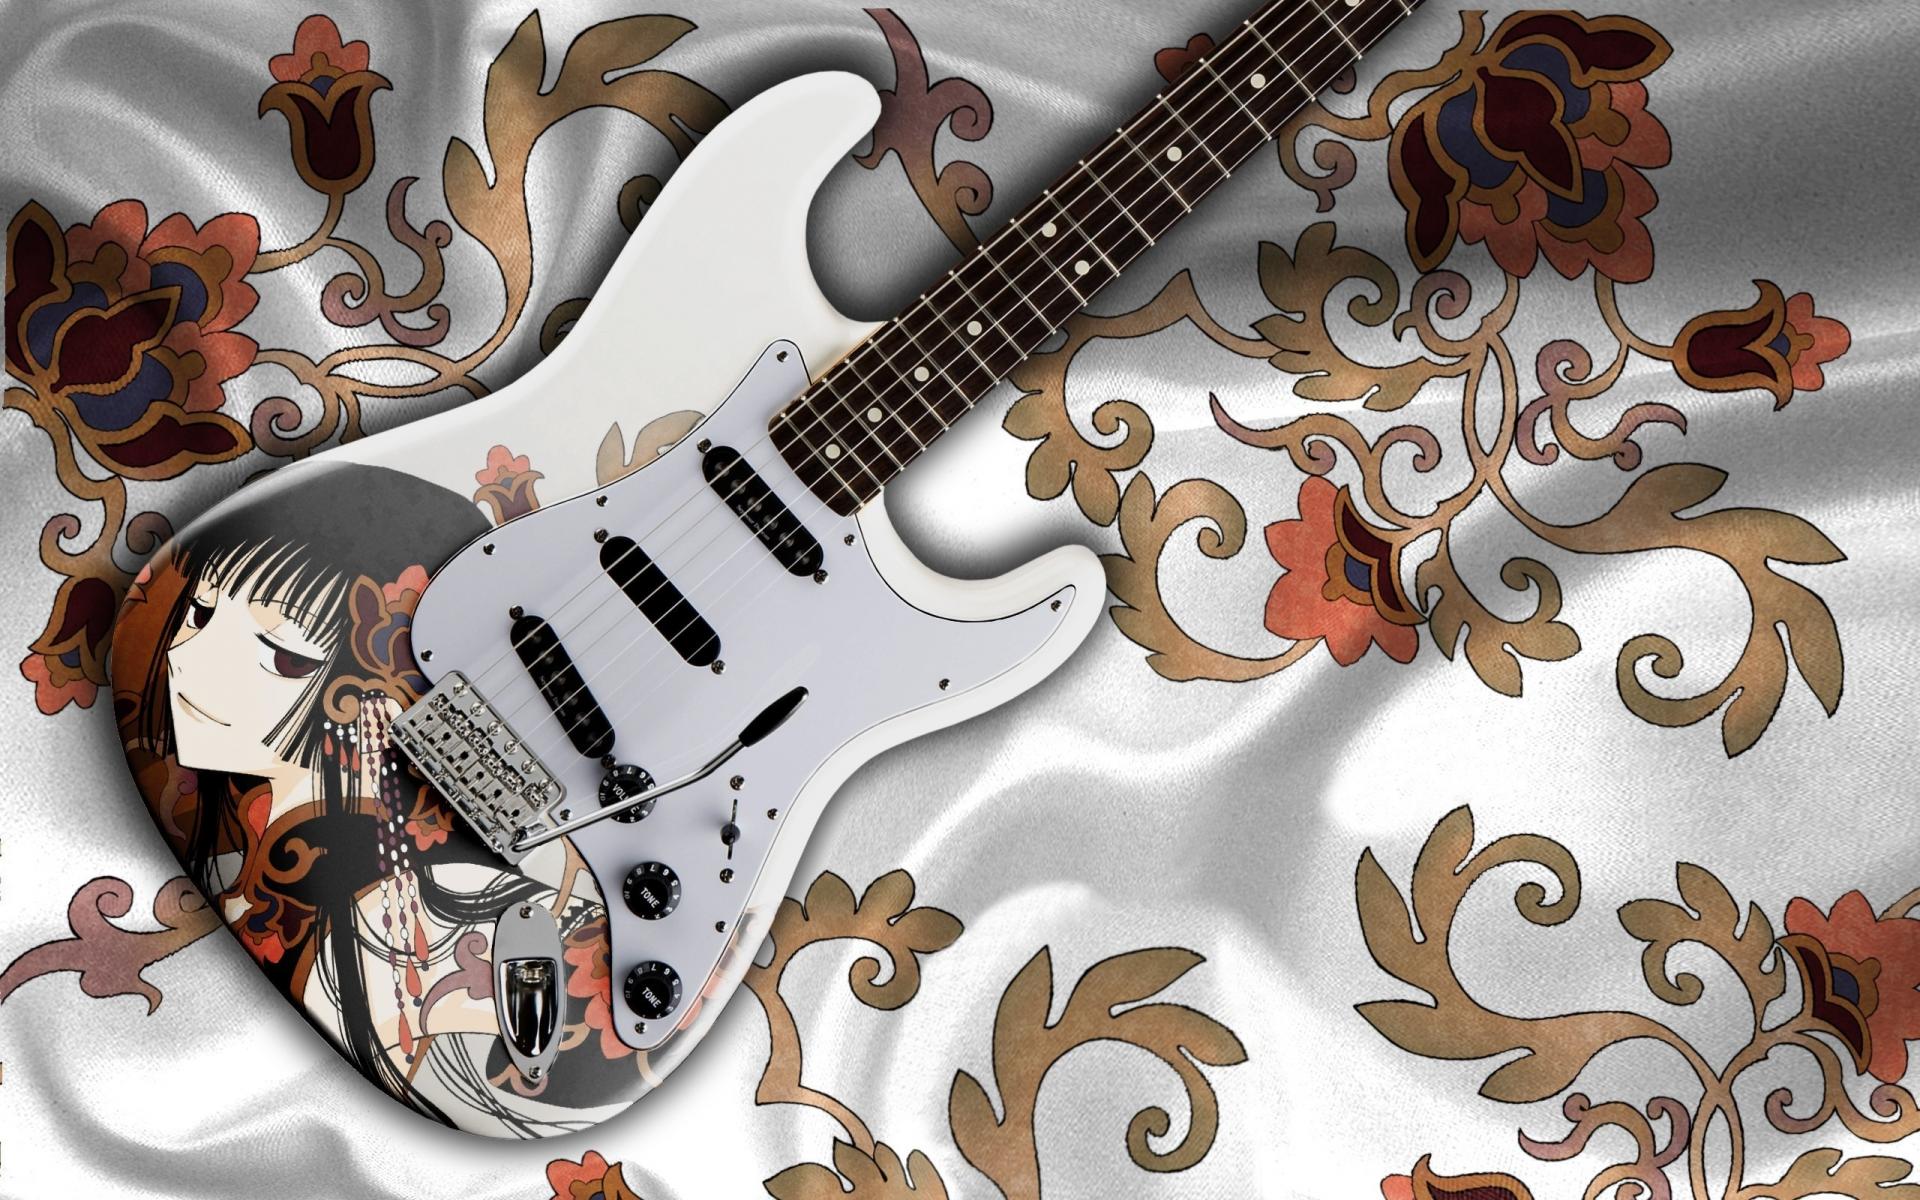 Guitar 4K wallpaper for your desktop or mobile screen free